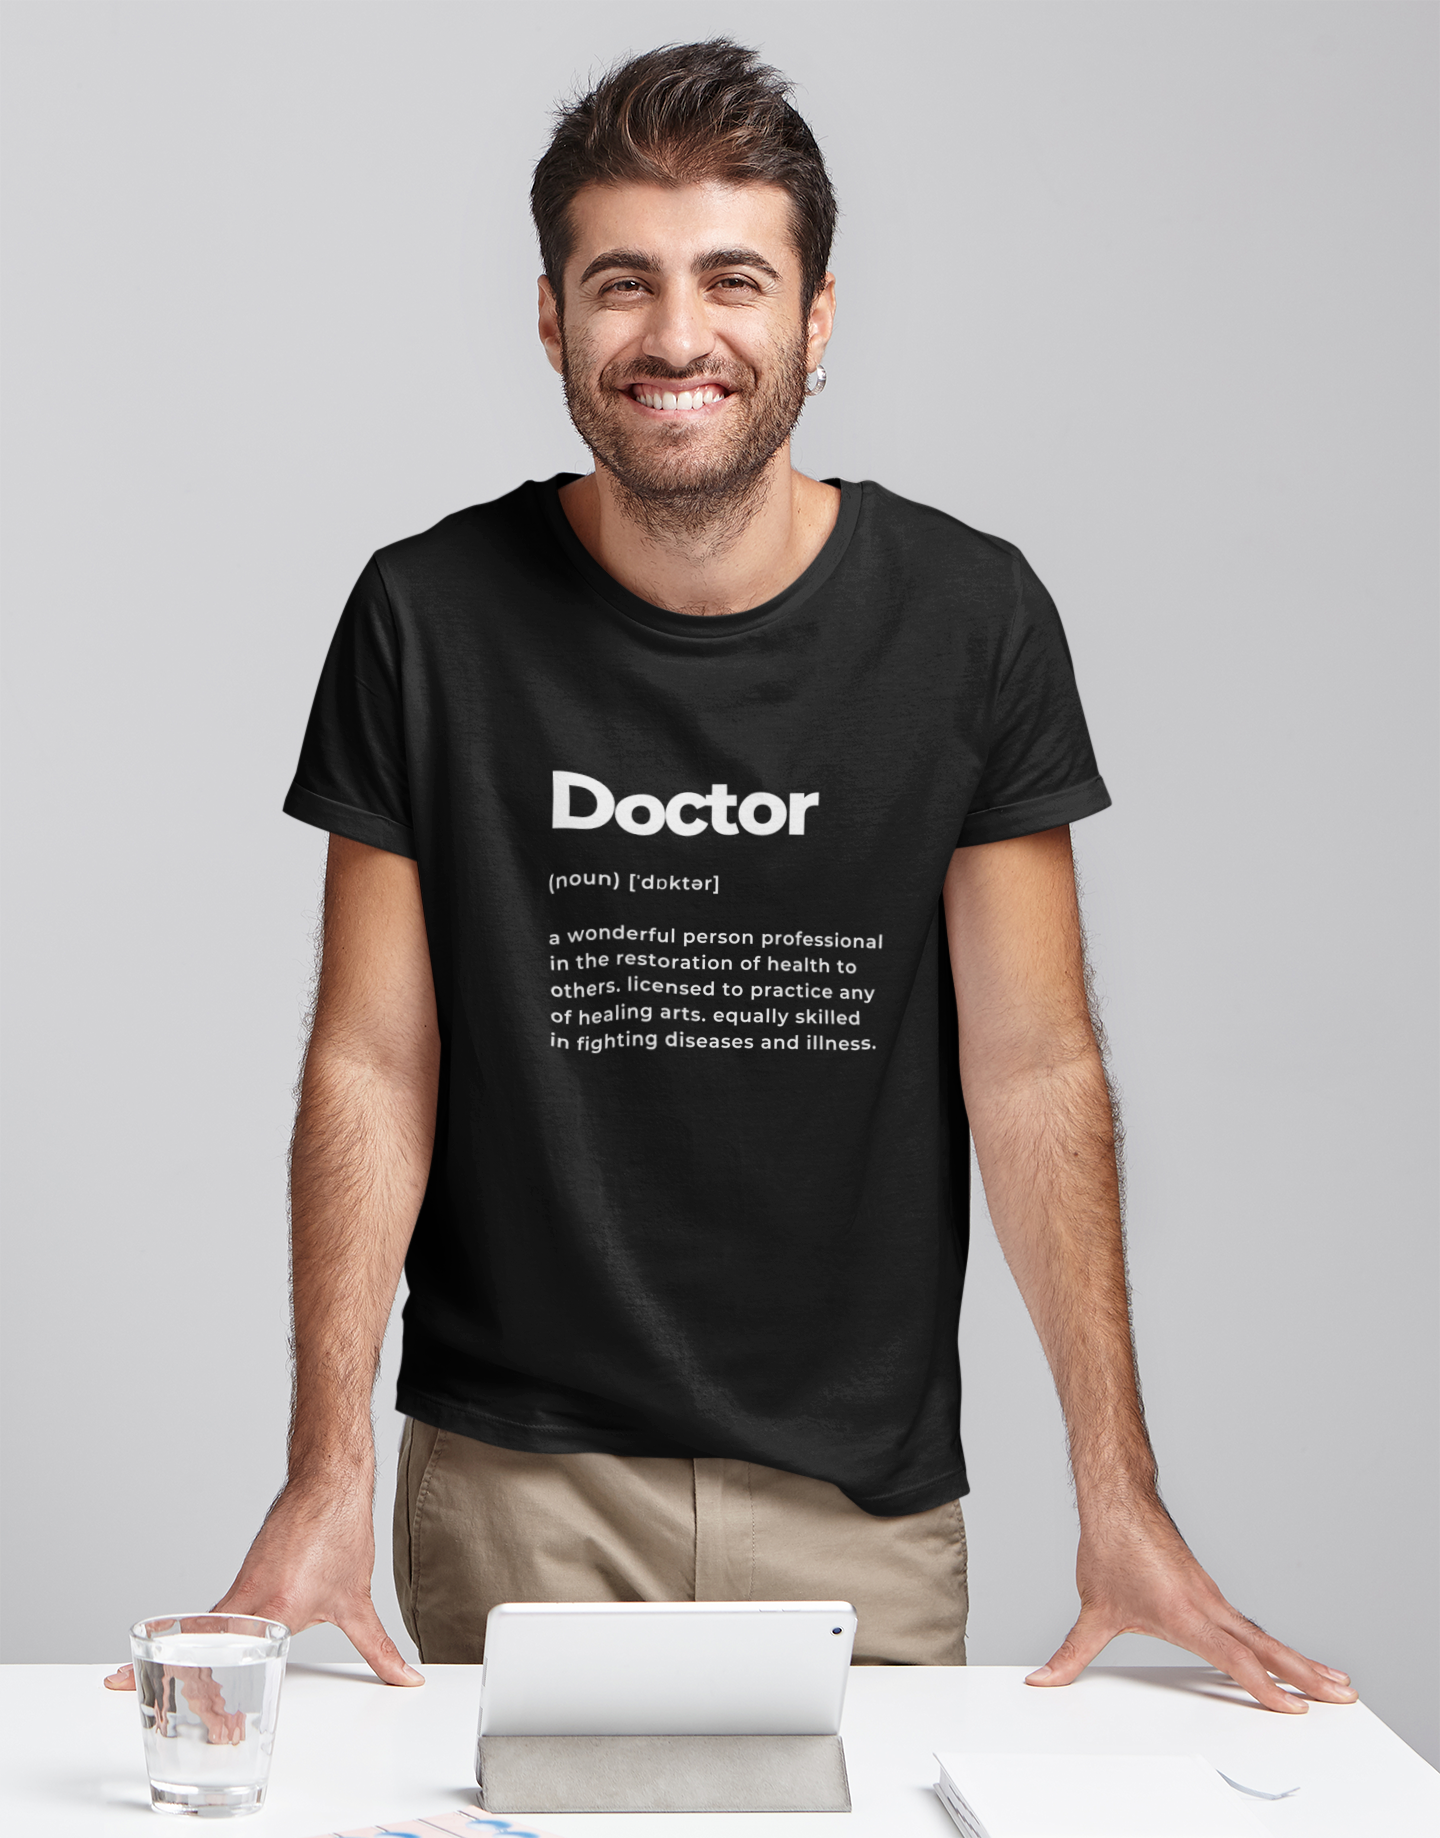 Doctor shirt